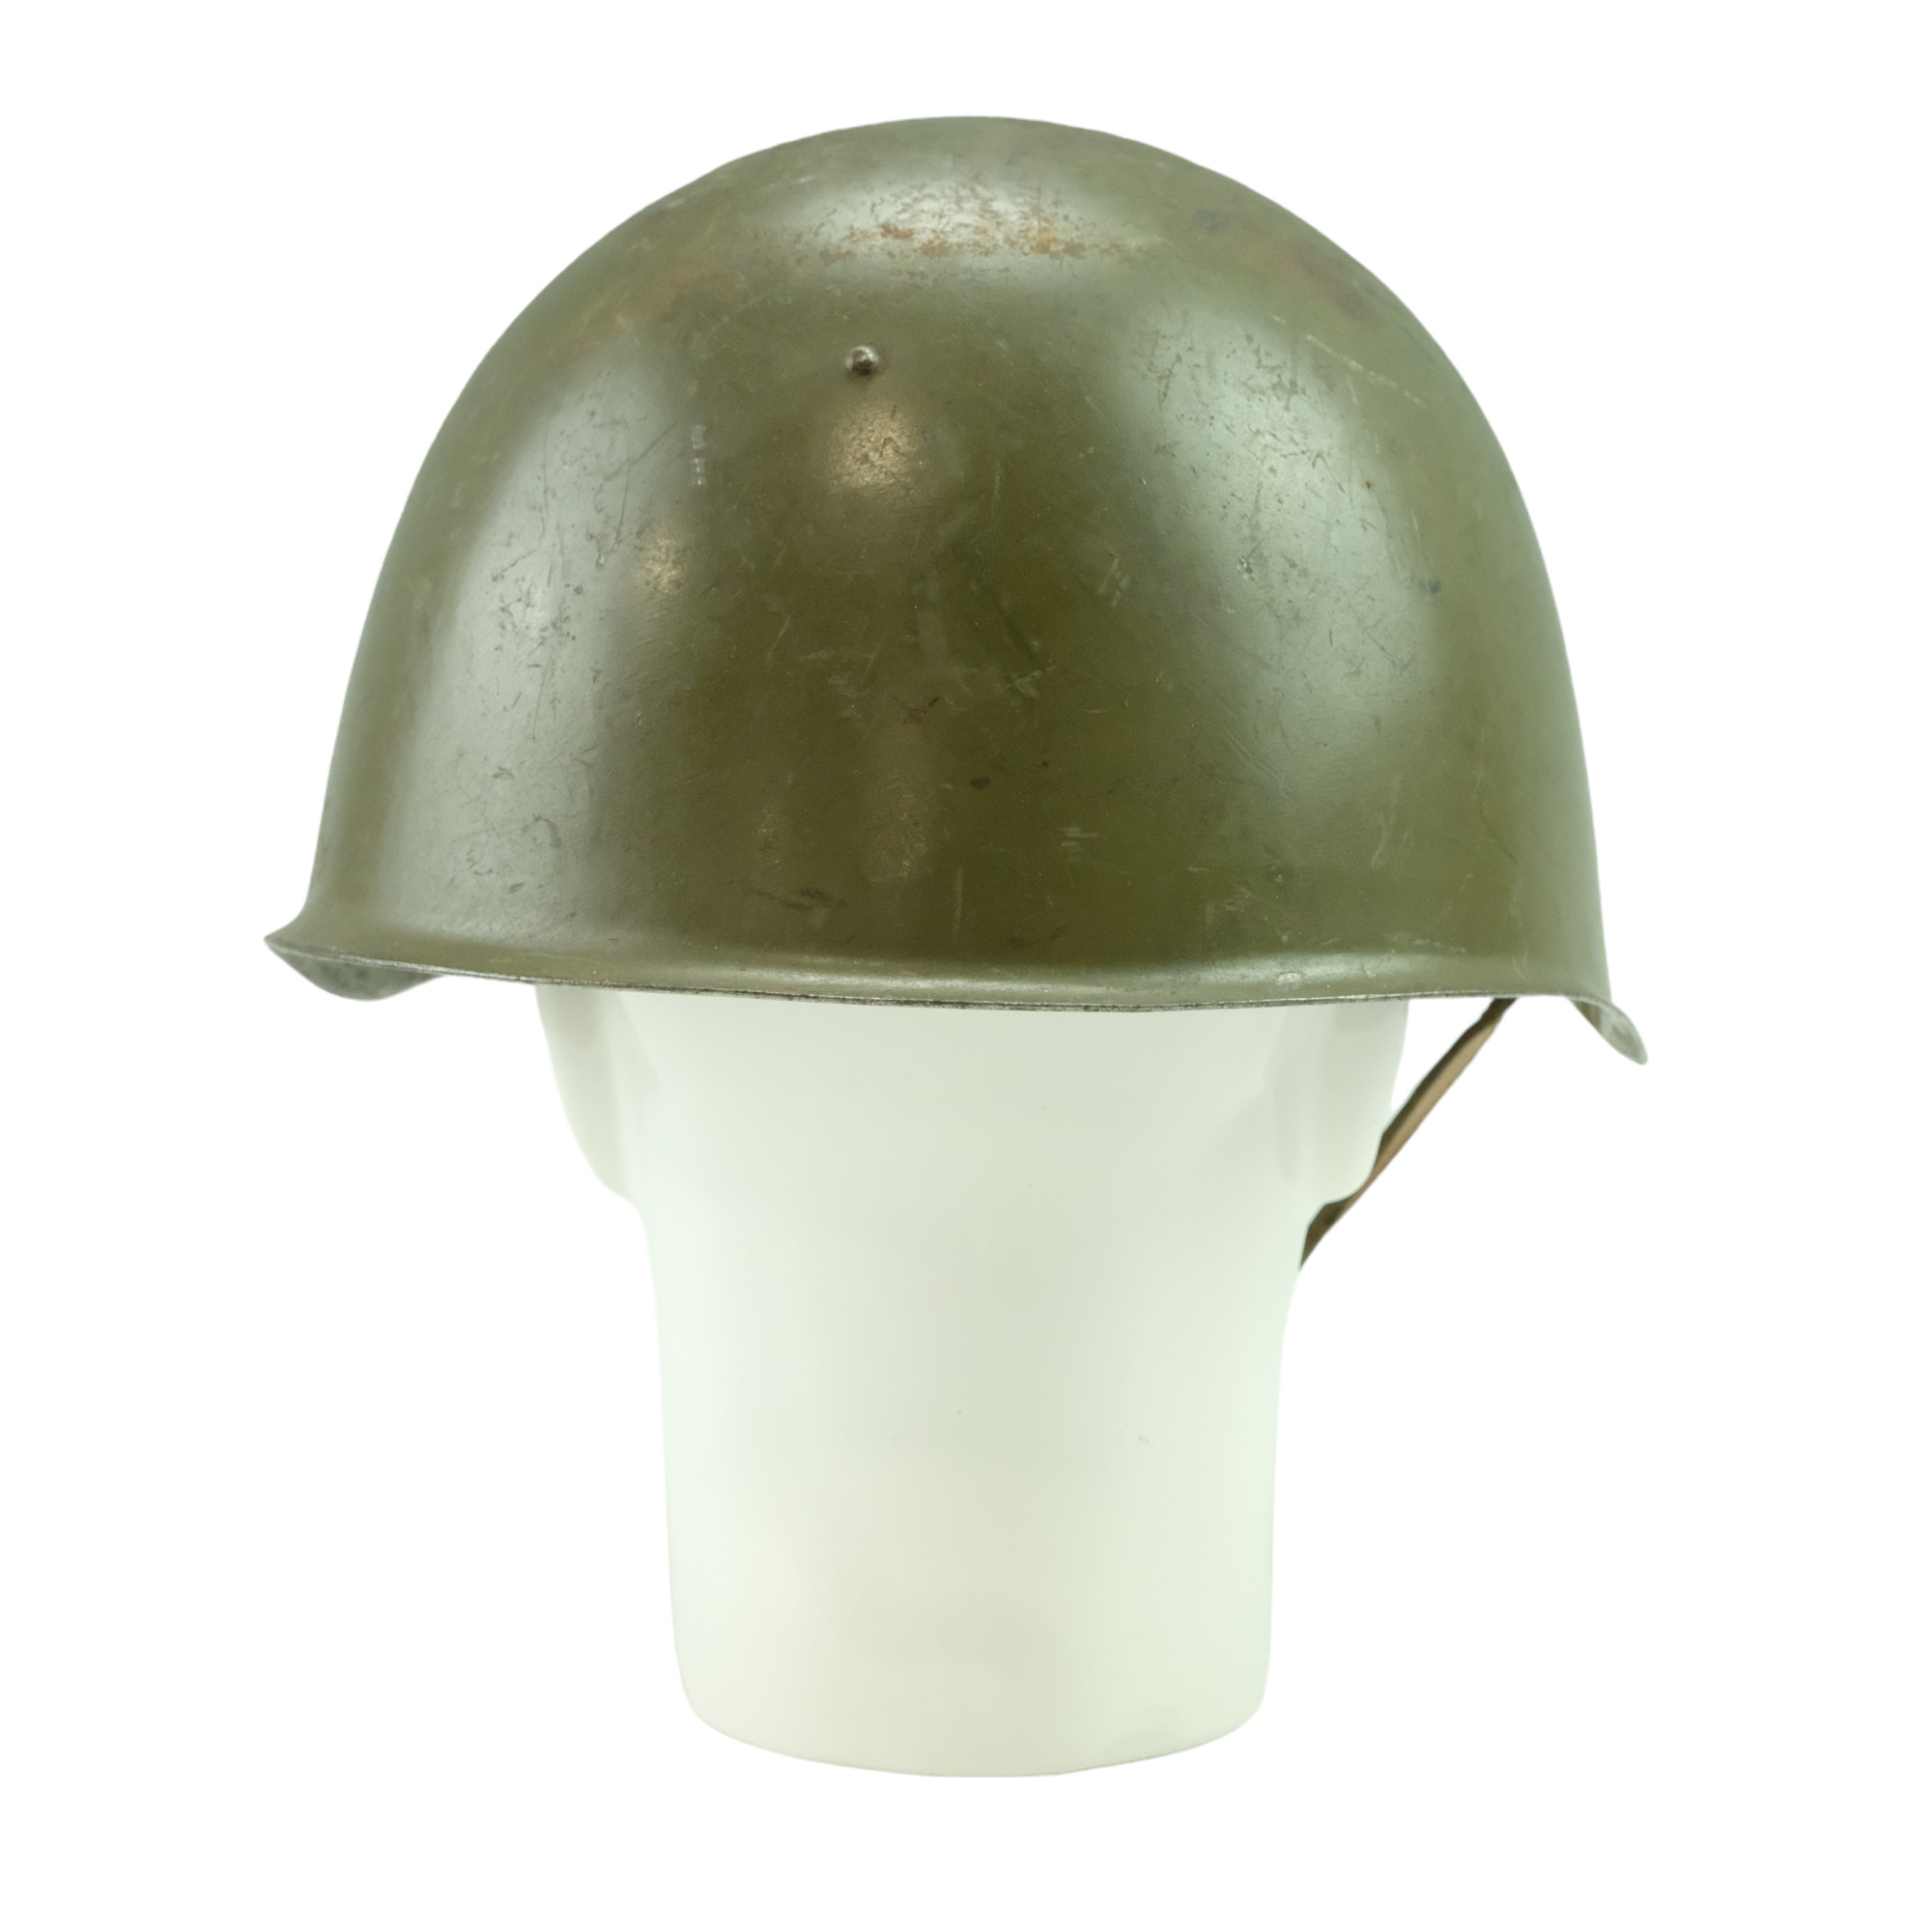 A Bulgarian Ssh40 helmet - Image 3 of 5